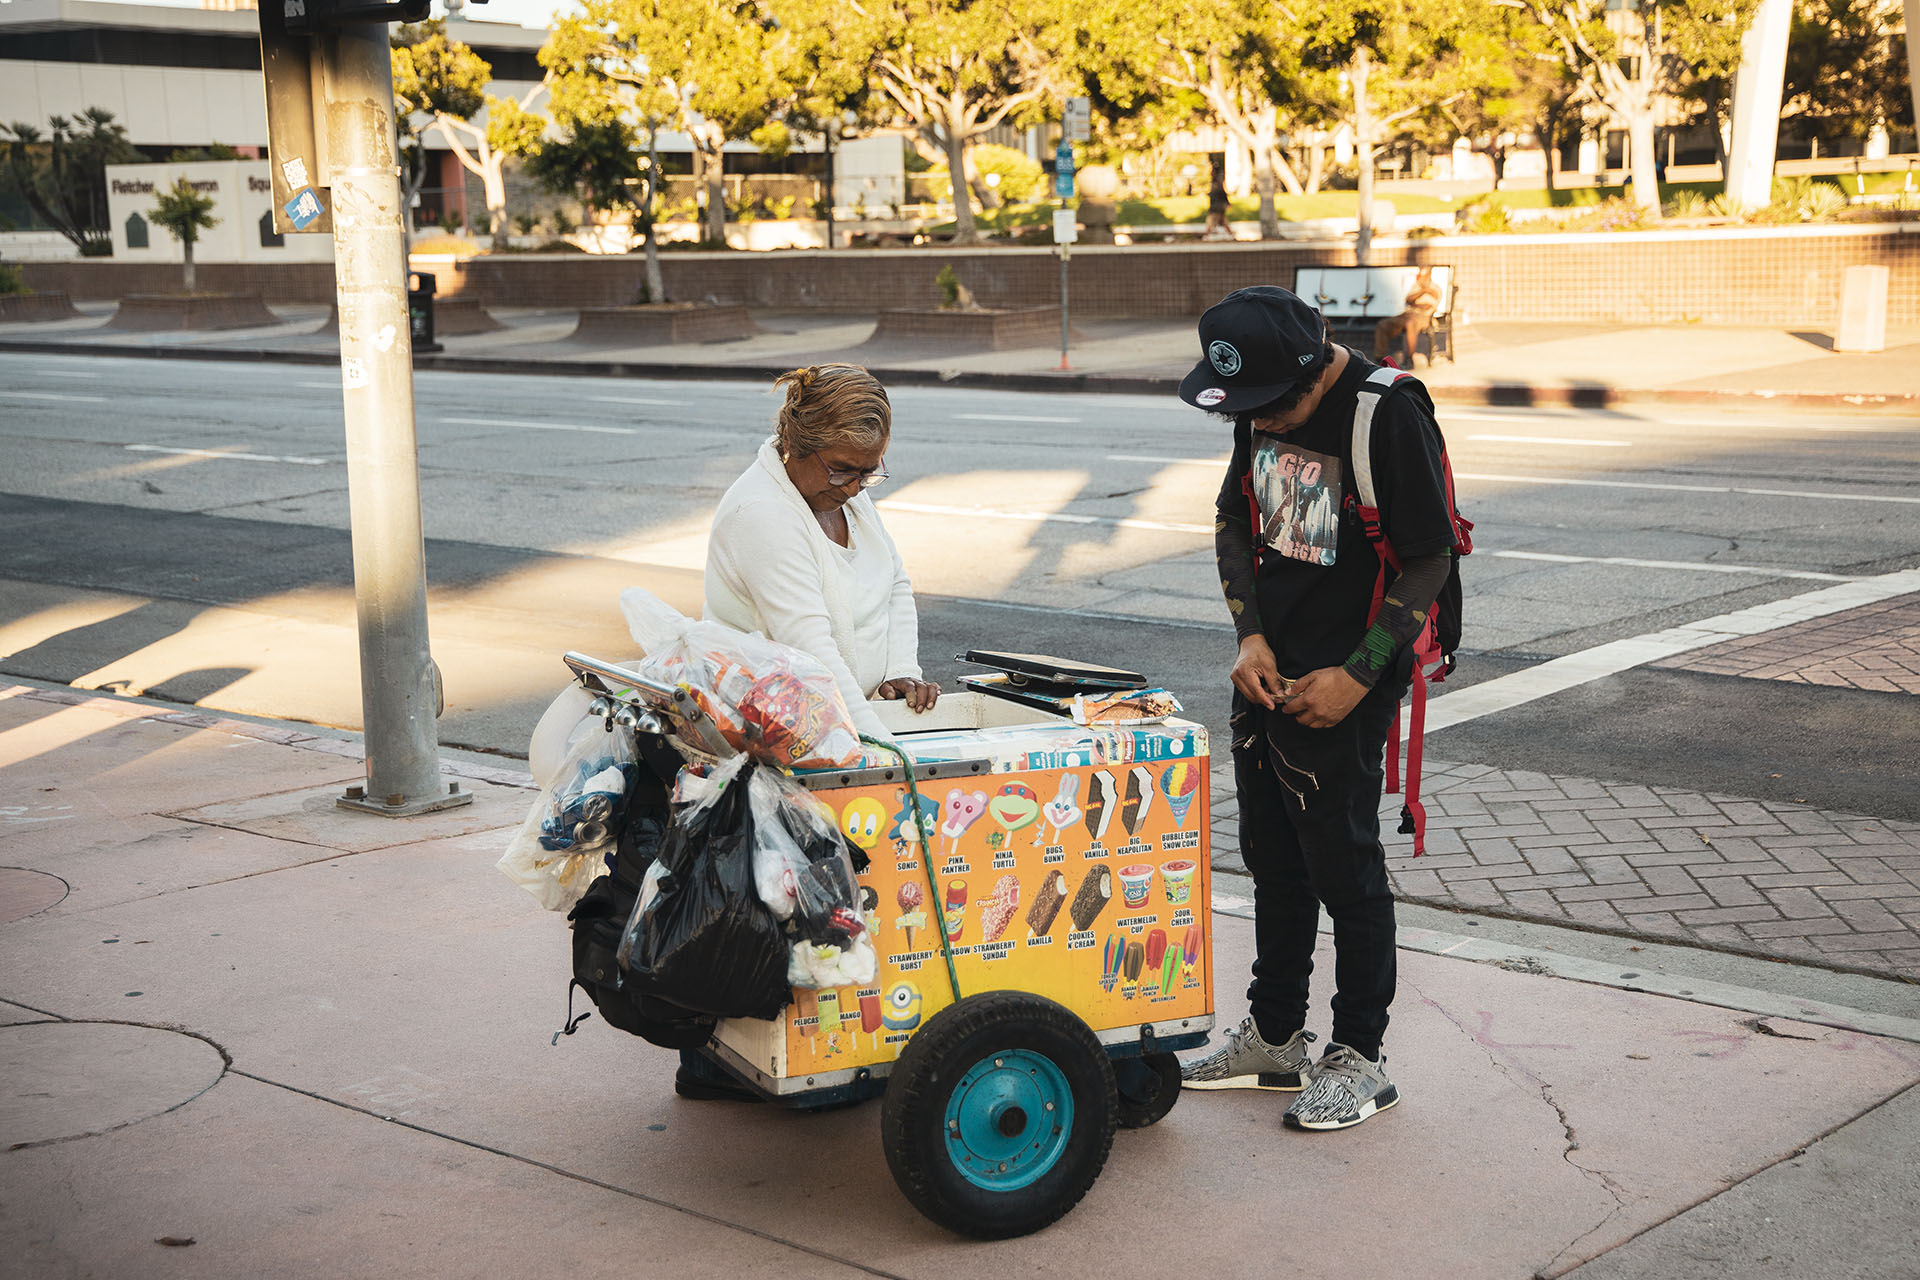 Latino Ice cream Vendor in Hollywood